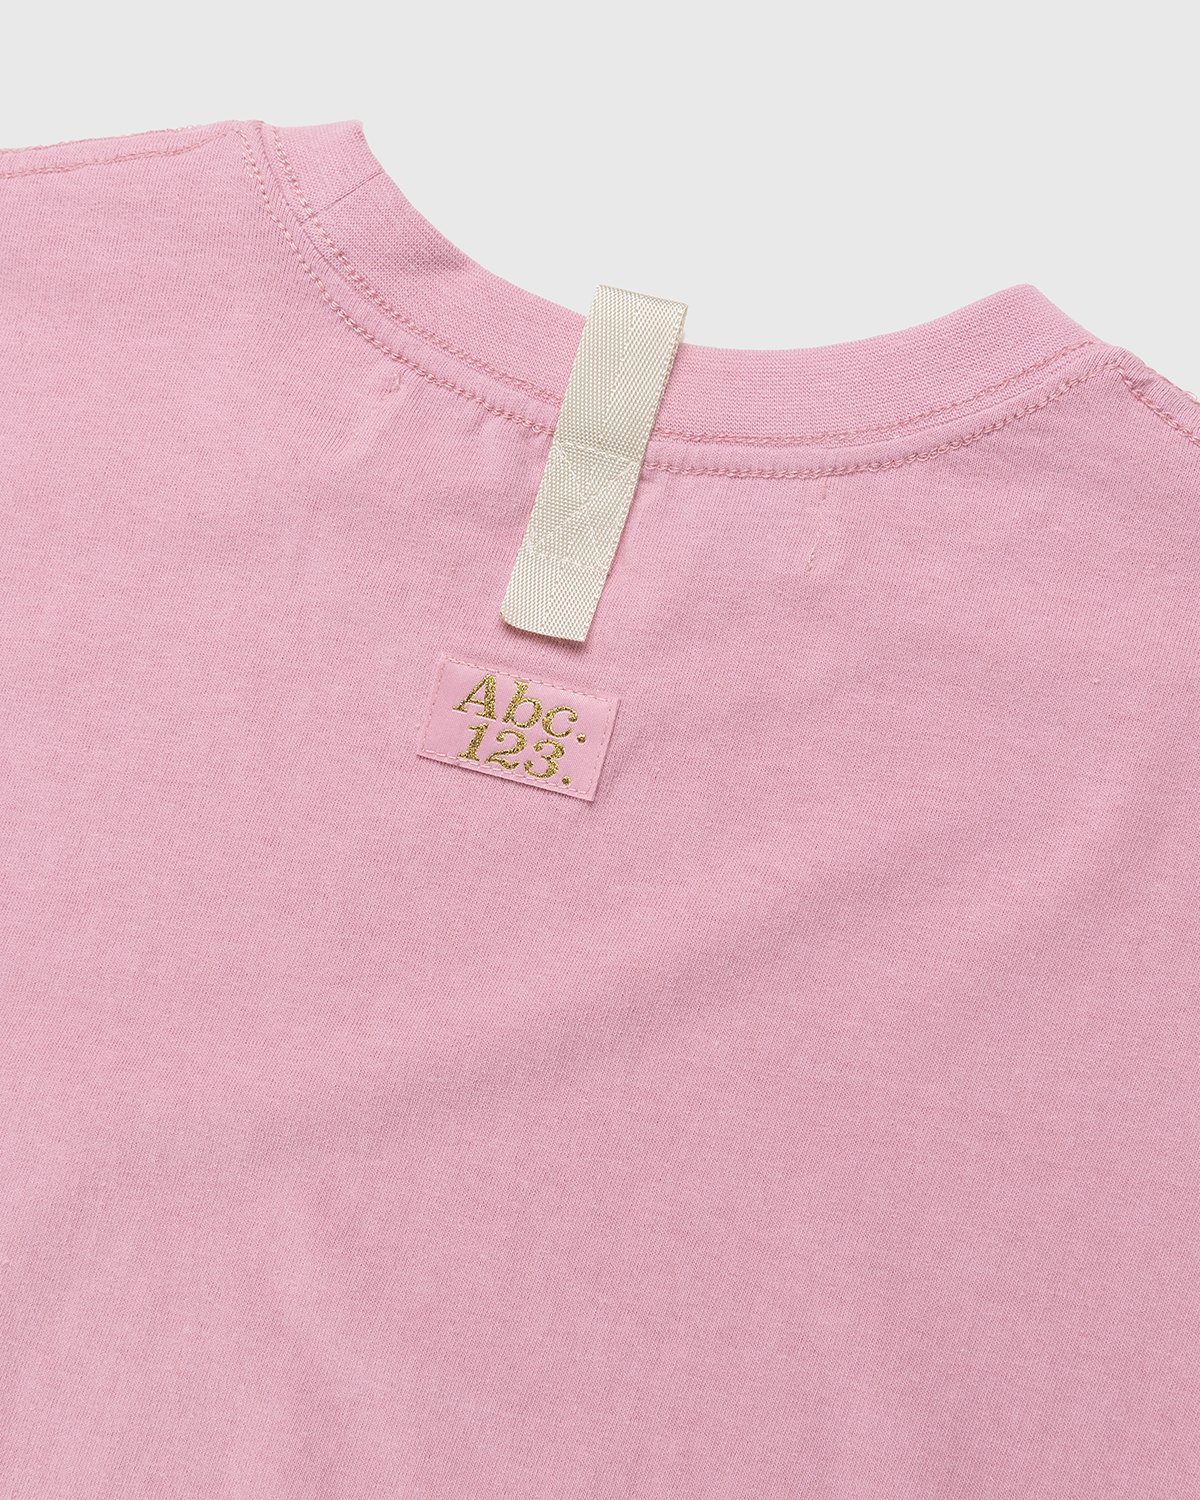 Abc. - Short-Sleeve Pocket Tee Morganite - Clothing - Pink - Image 3